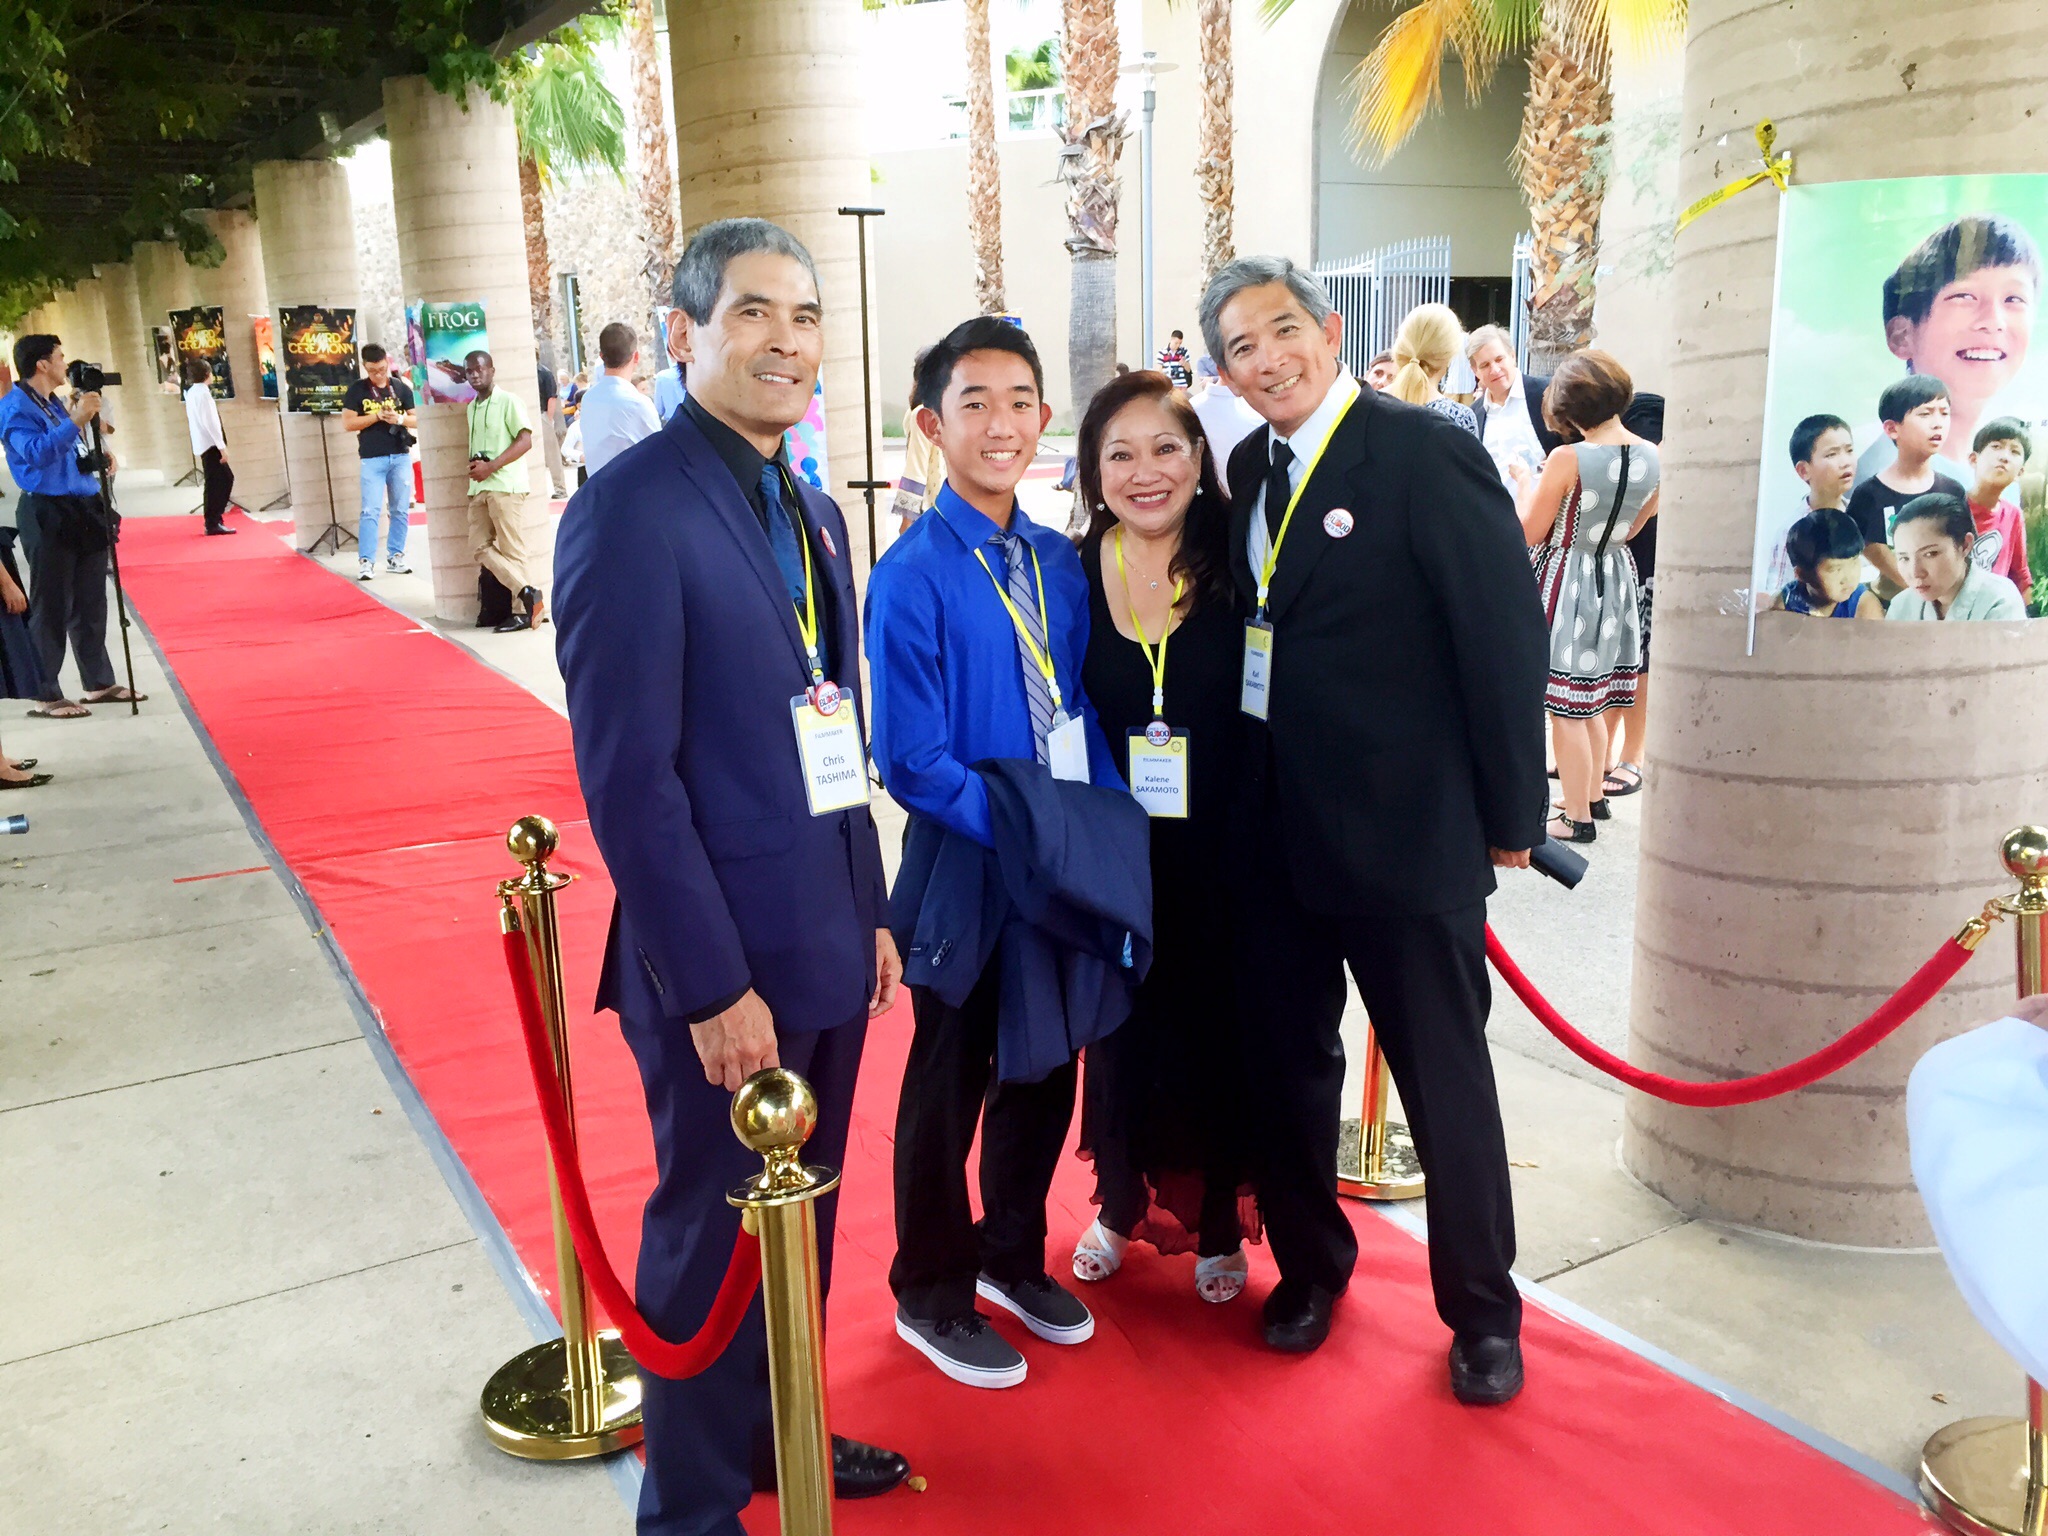 On the Red Carpet: San Diego International Kids' Film Festival Award Ceremony - Lead actors Chris Tashima and Kyler Sakamoto (and Kalene & Karl Sakamoto) representing 